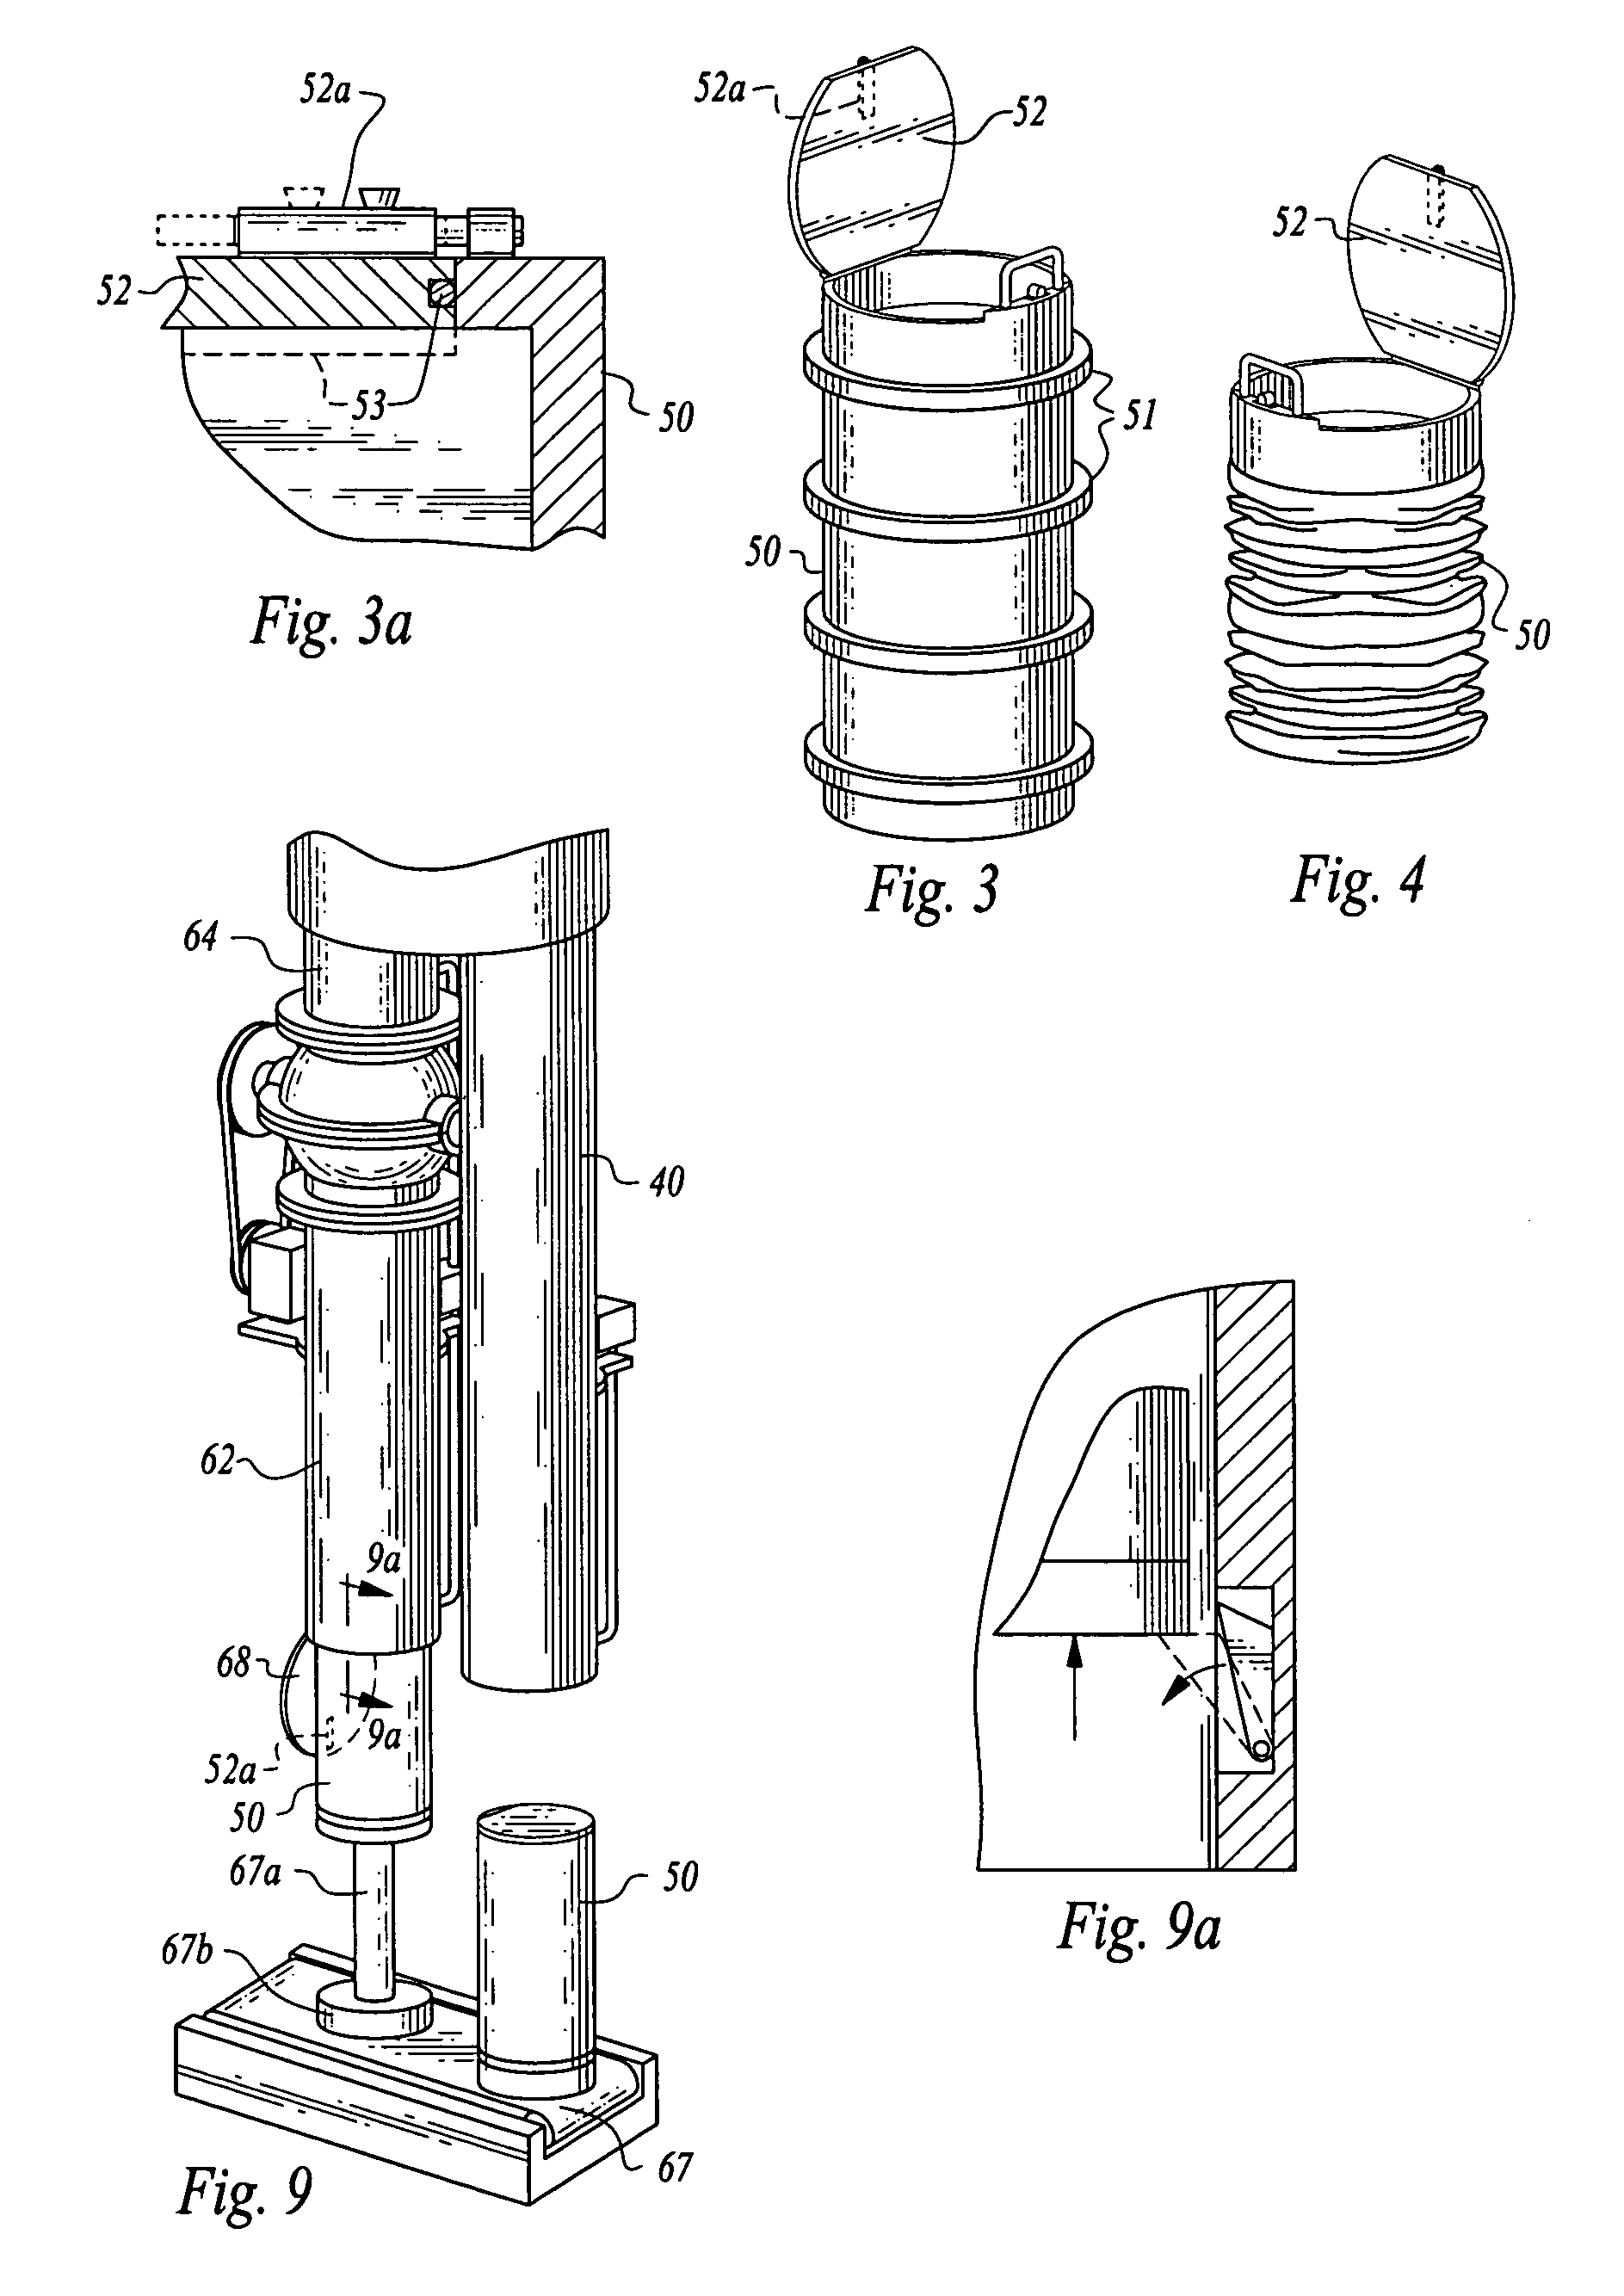 Hydraulic elevation apparatus and method